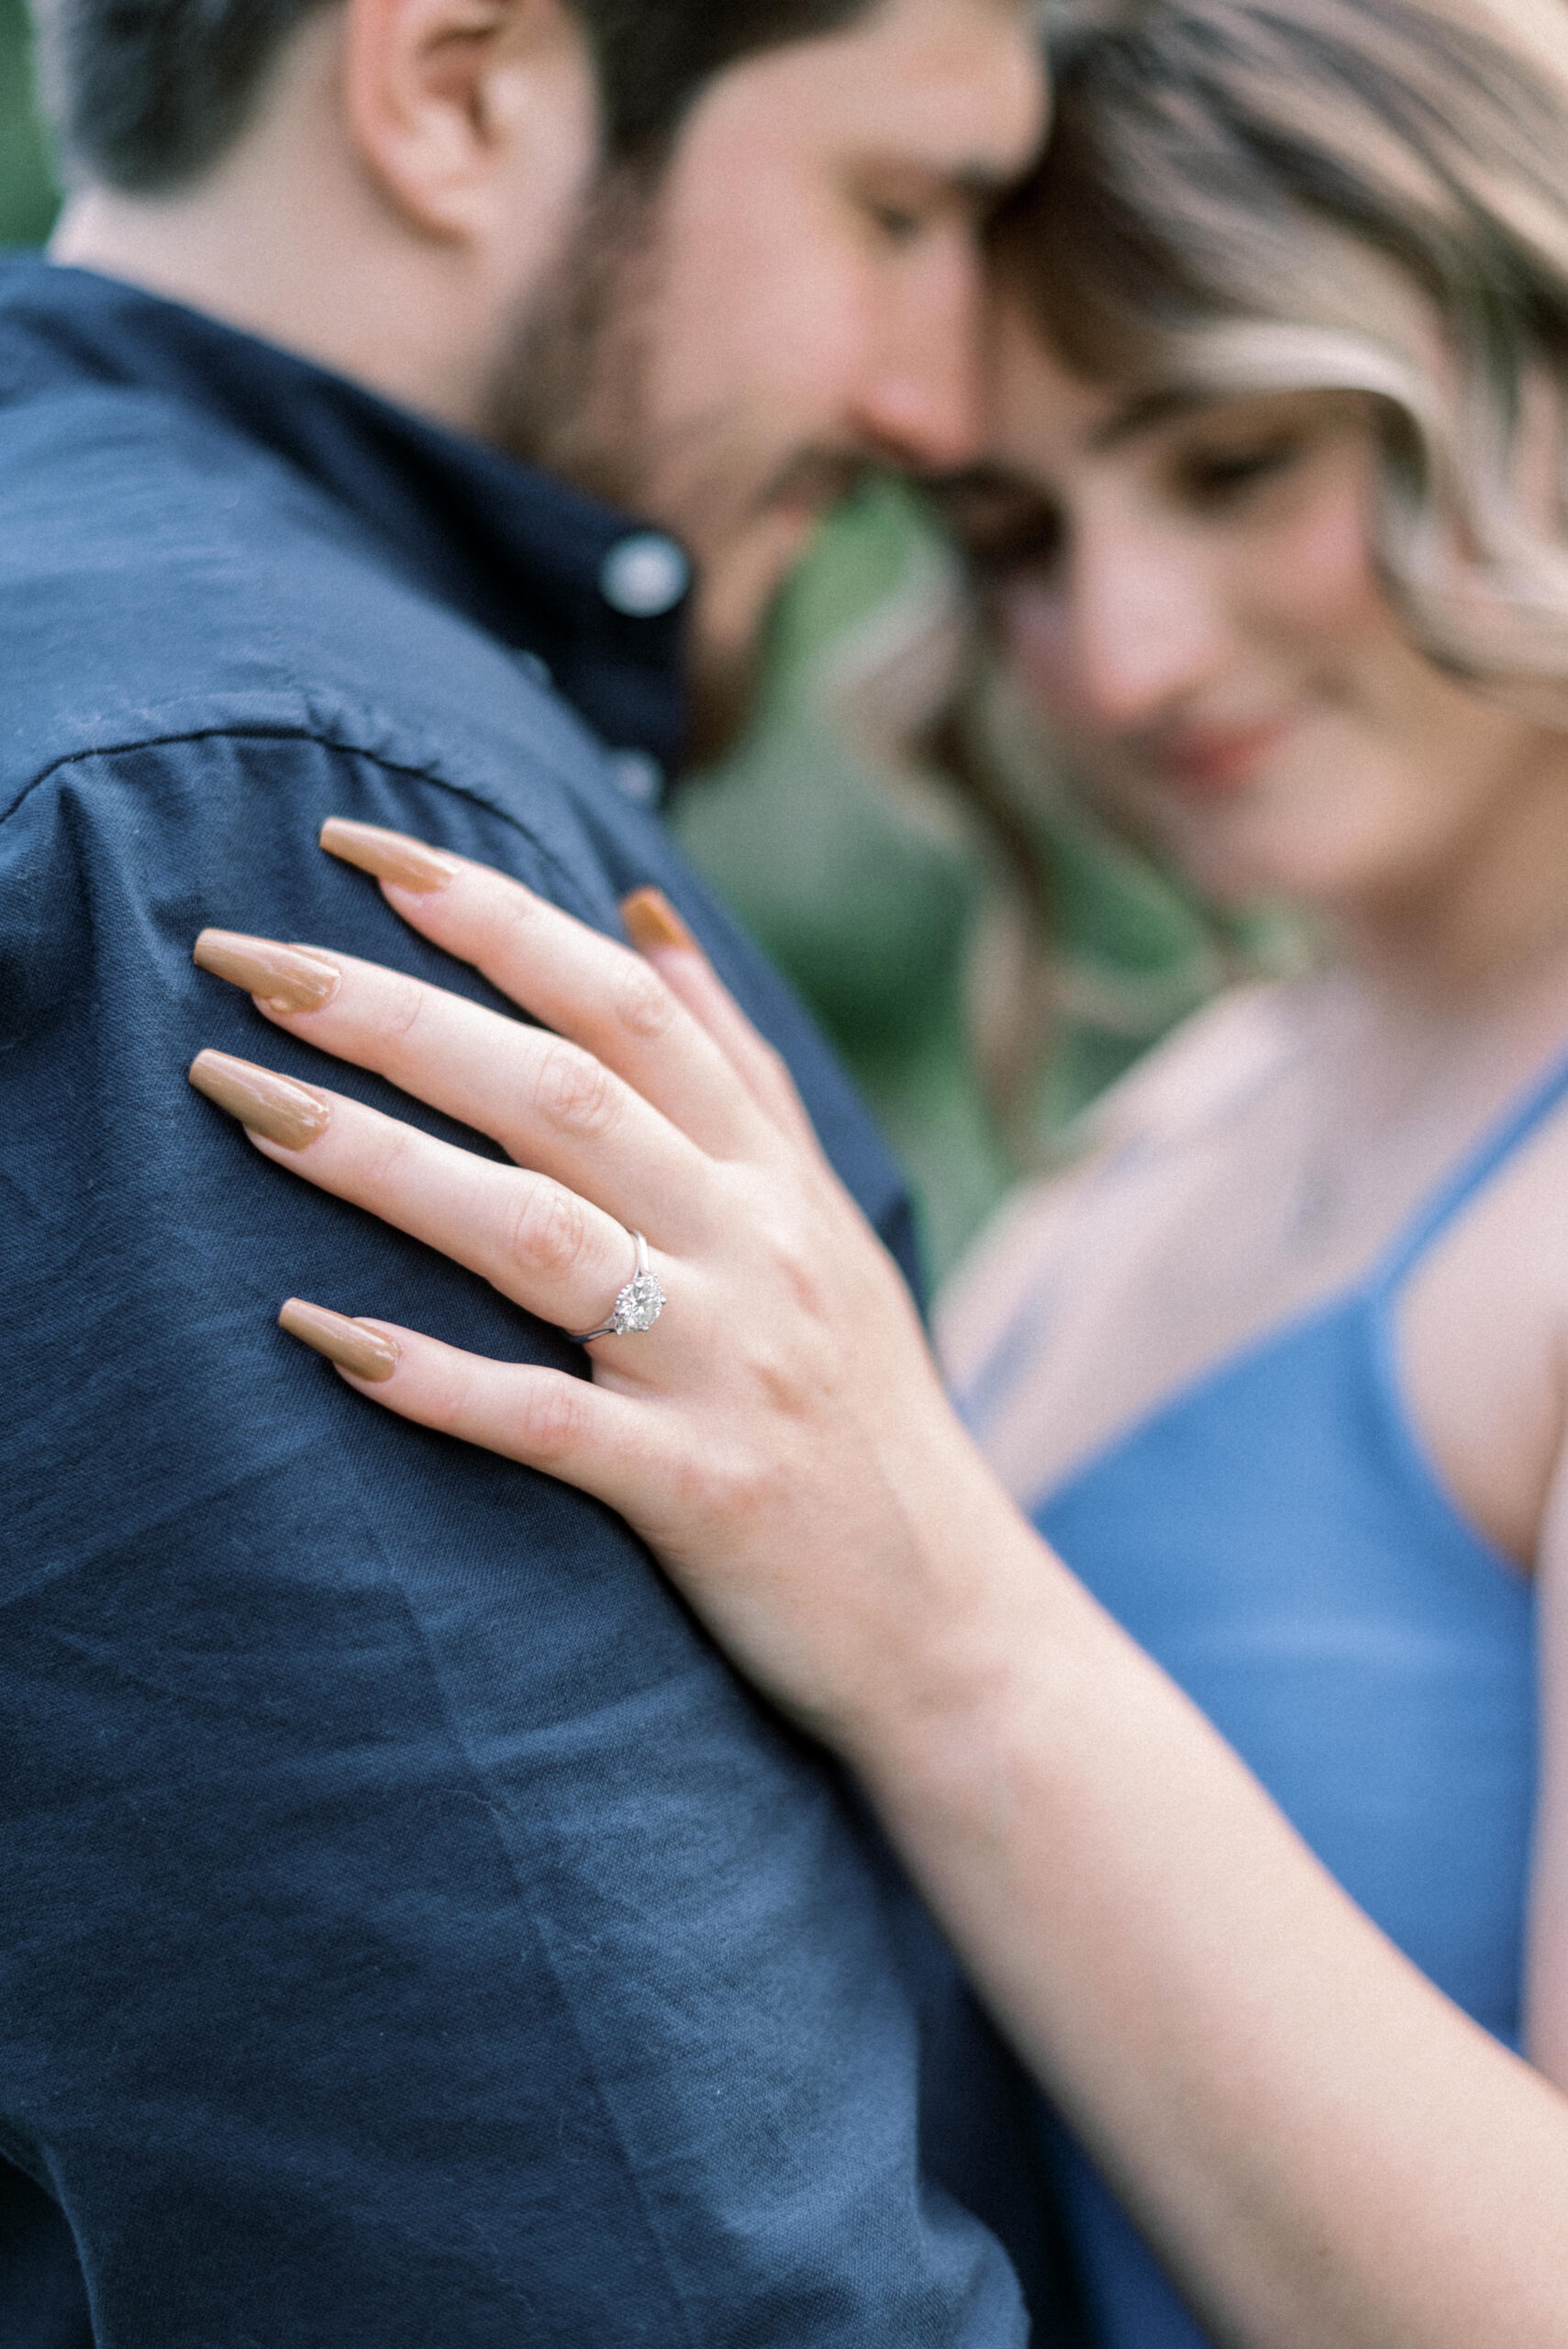 Maryland wedding photographer captures close up of engagement ring